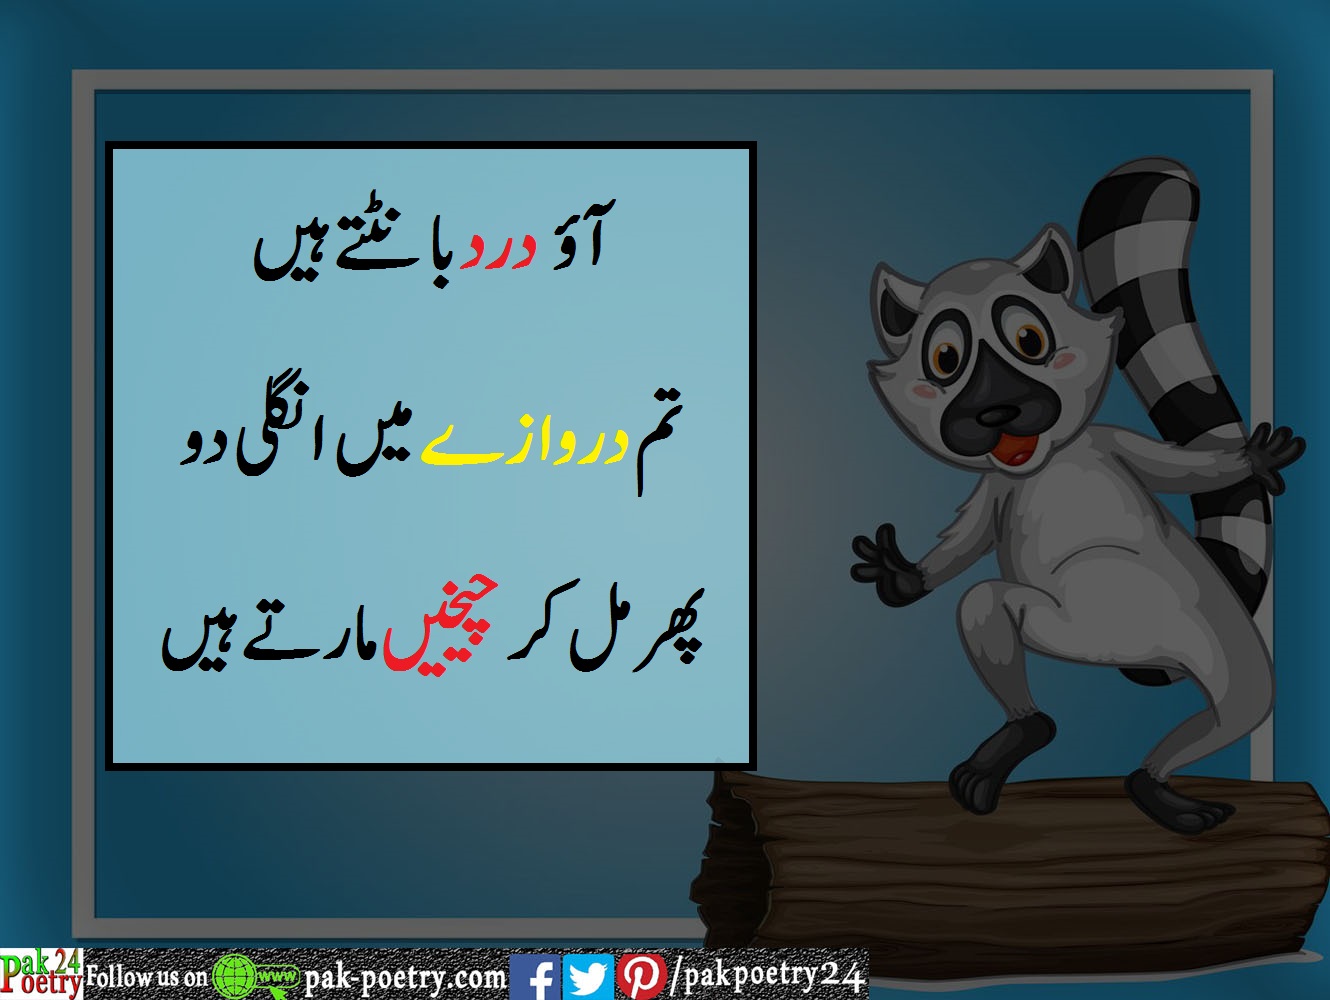 Urdu Funny Poetry - Top 5 Collection - Pak Poetry 24